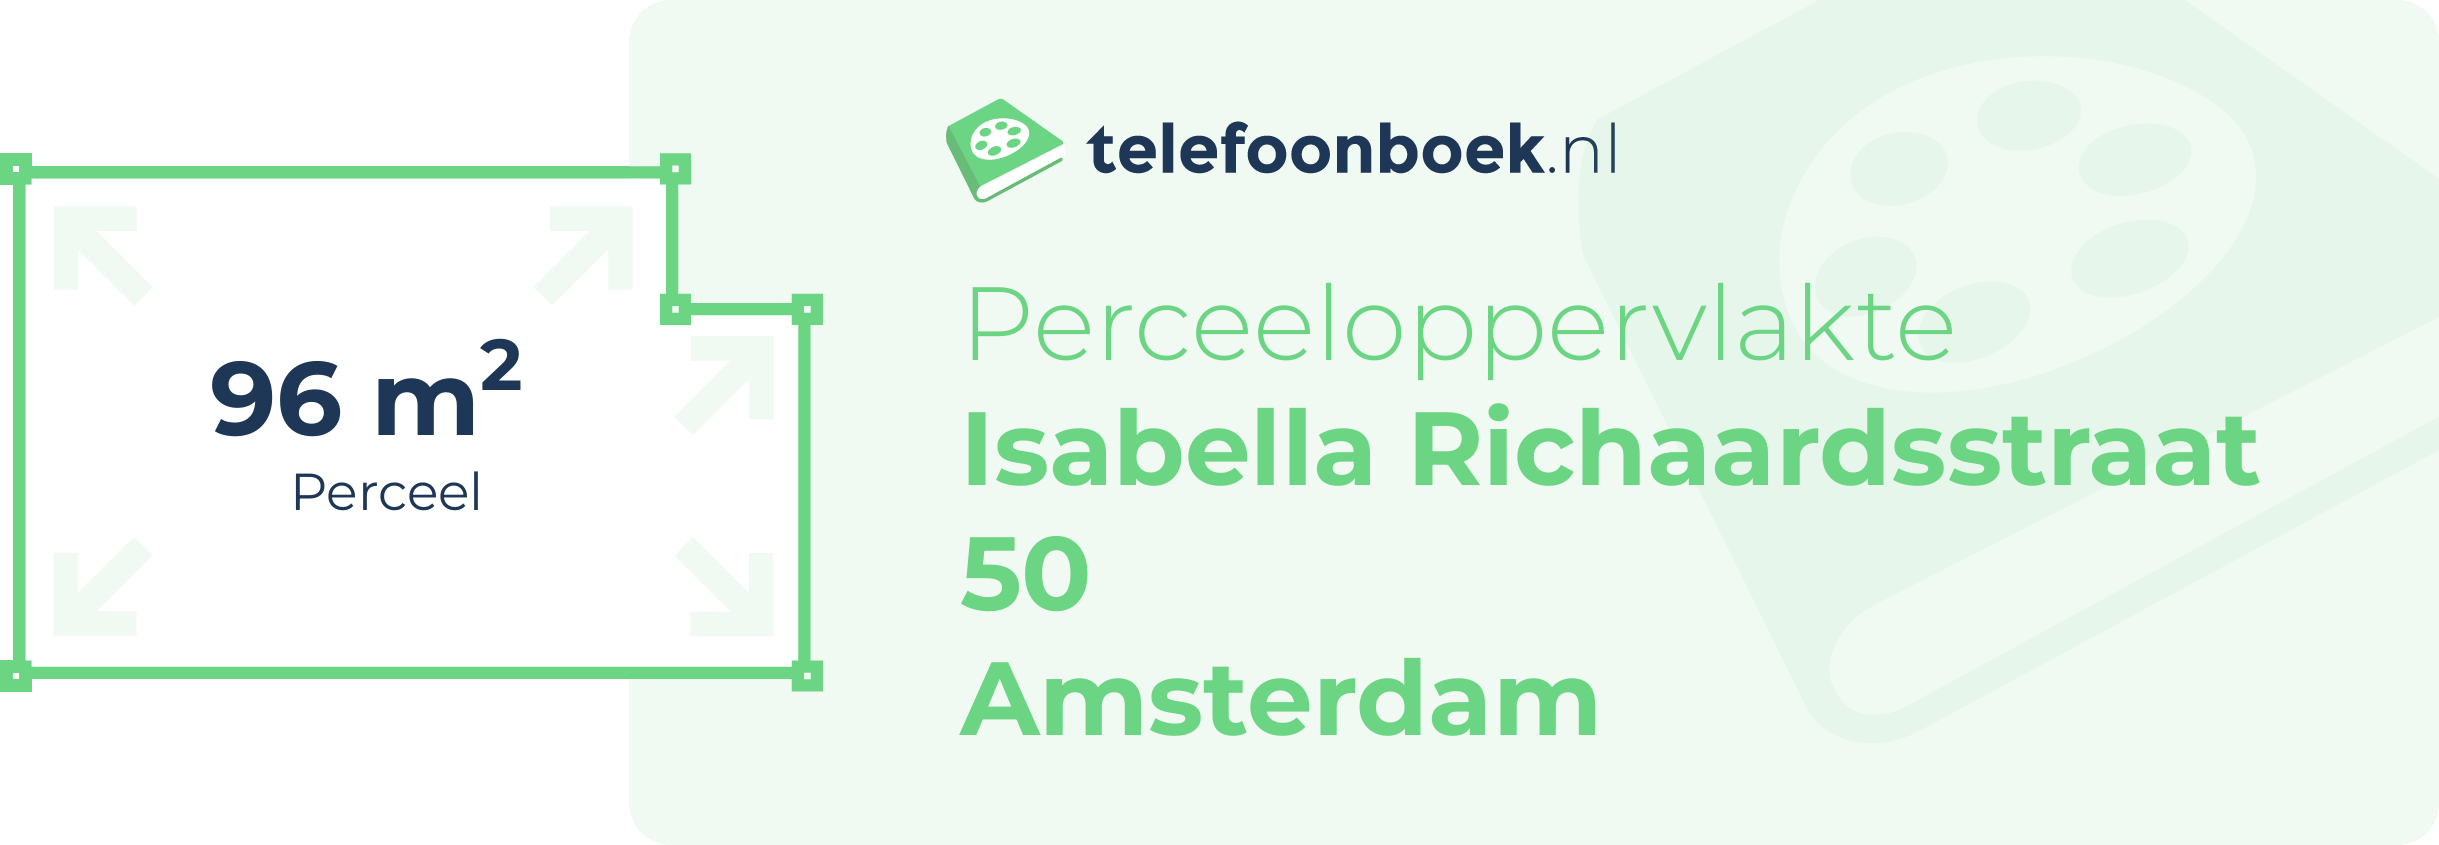 Perceeloppervlakte Isabella Richaardsstraat 50 Amsterdam